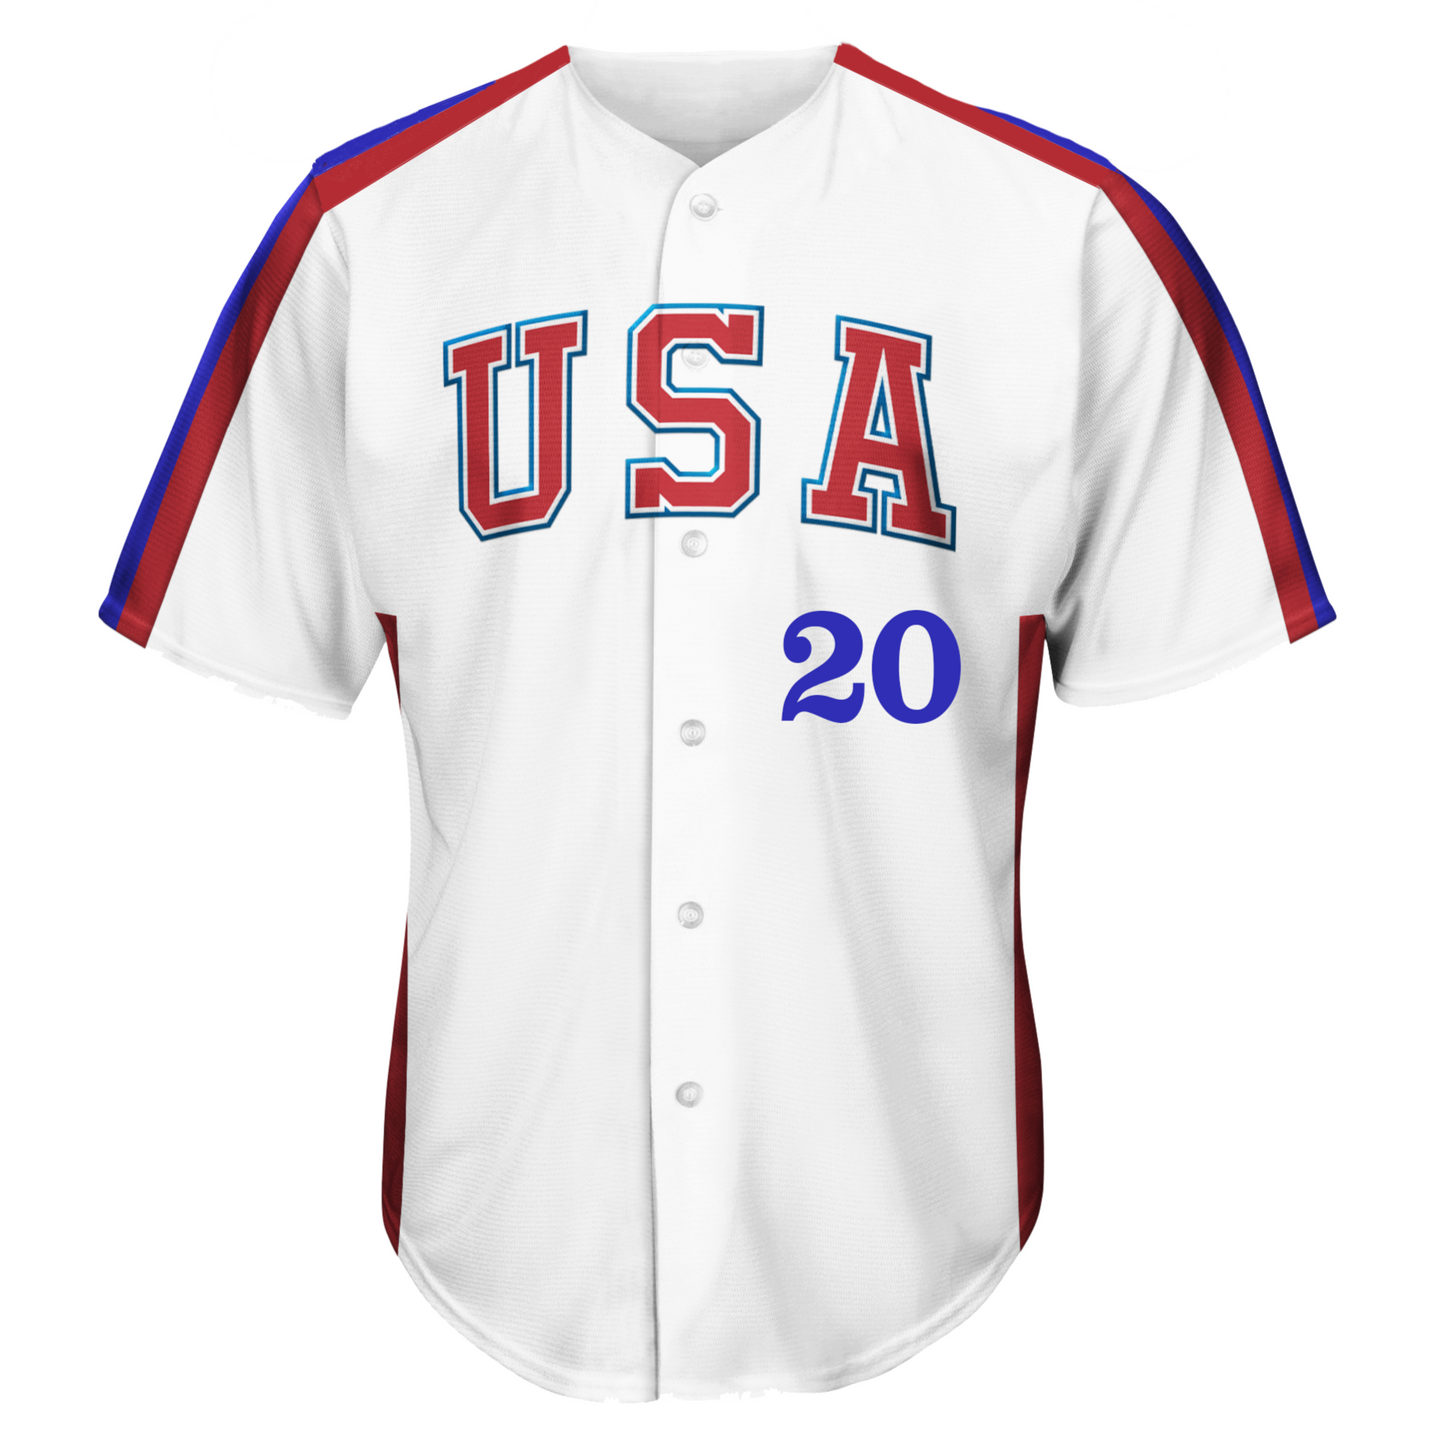 USA Baseball Jersey - Red - Medium - Royal Retros